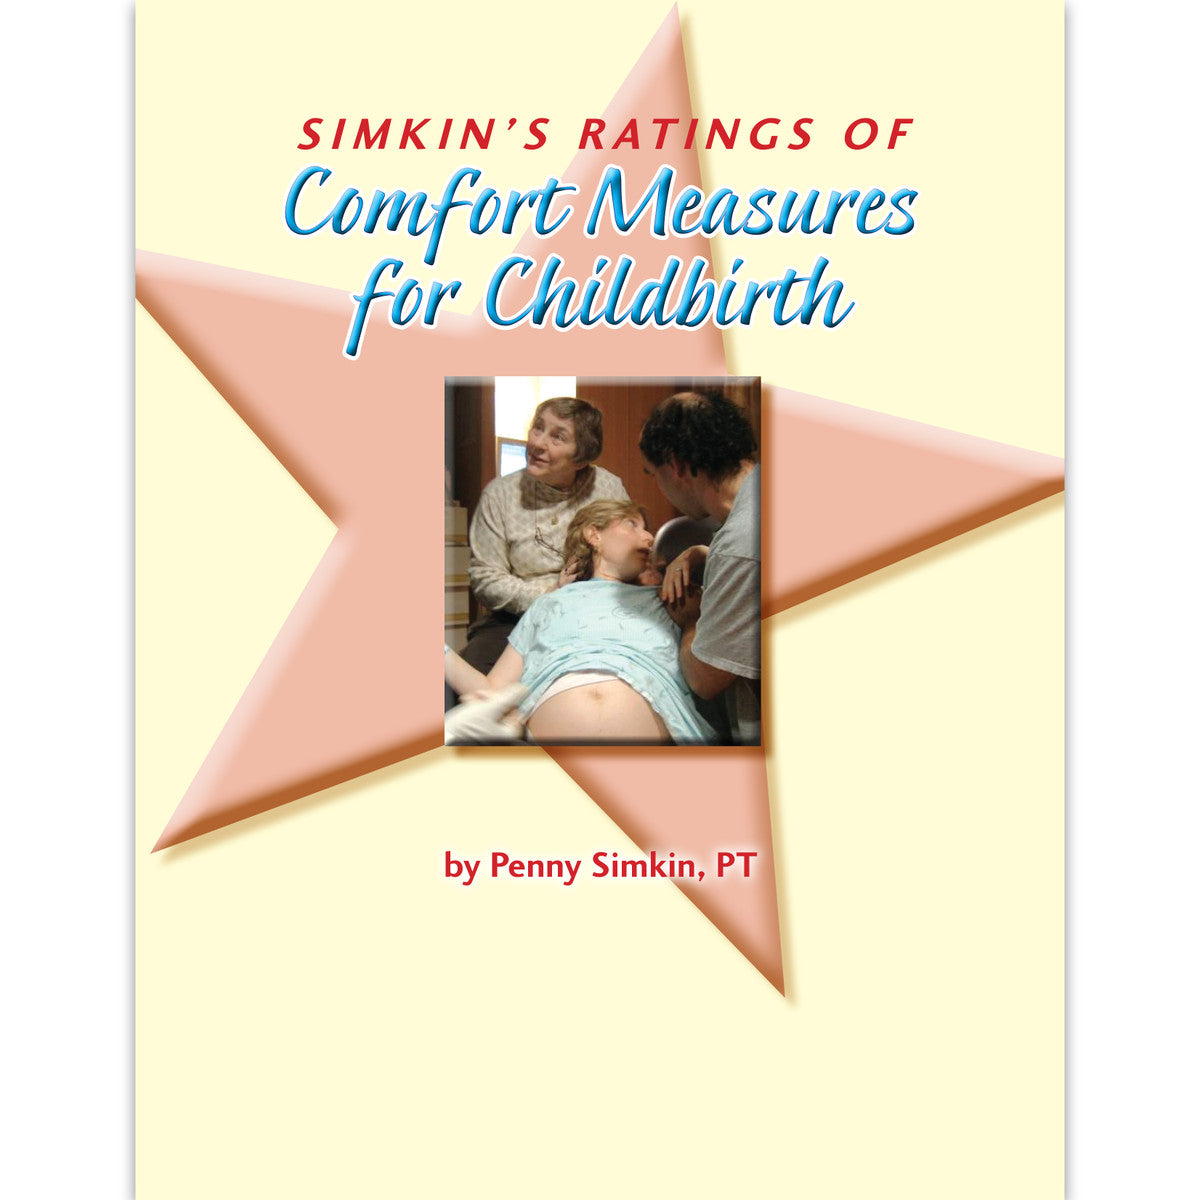 Simkin’s Ratings of Comfort Measures for Childbirth